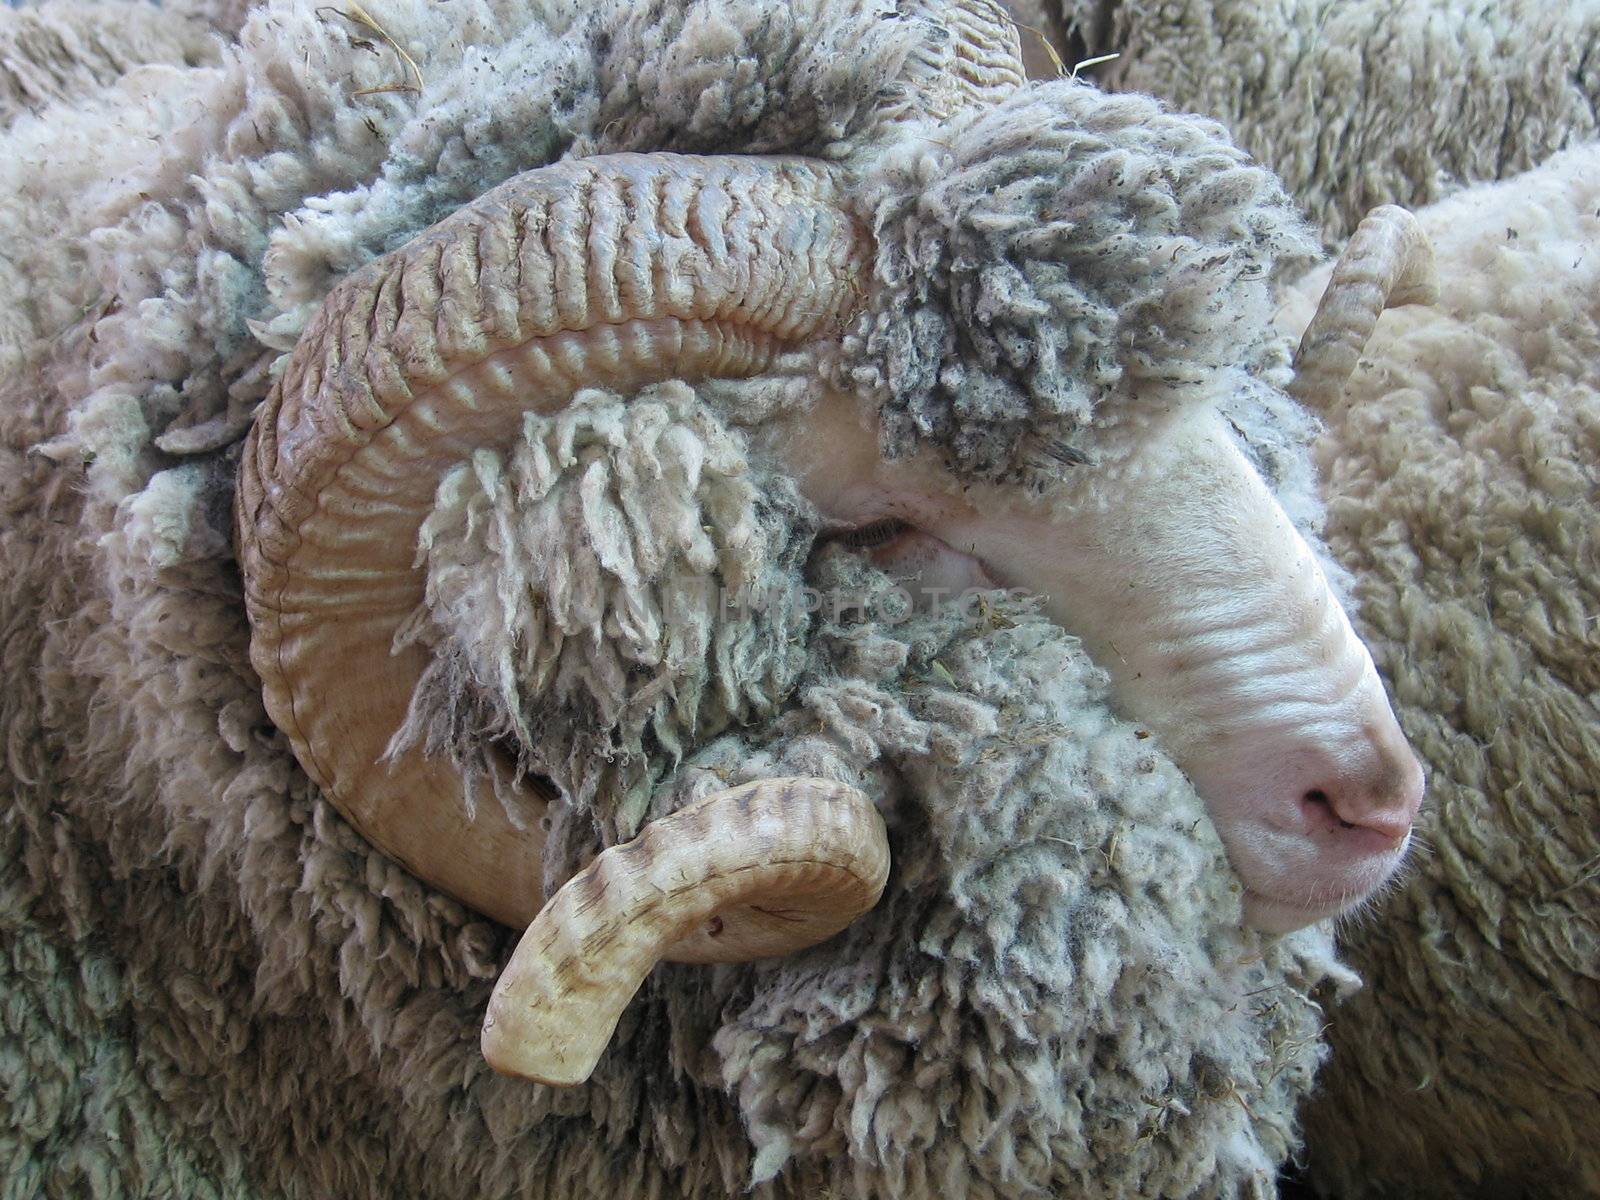 Fuzzy cute sheep at the farm exhibition